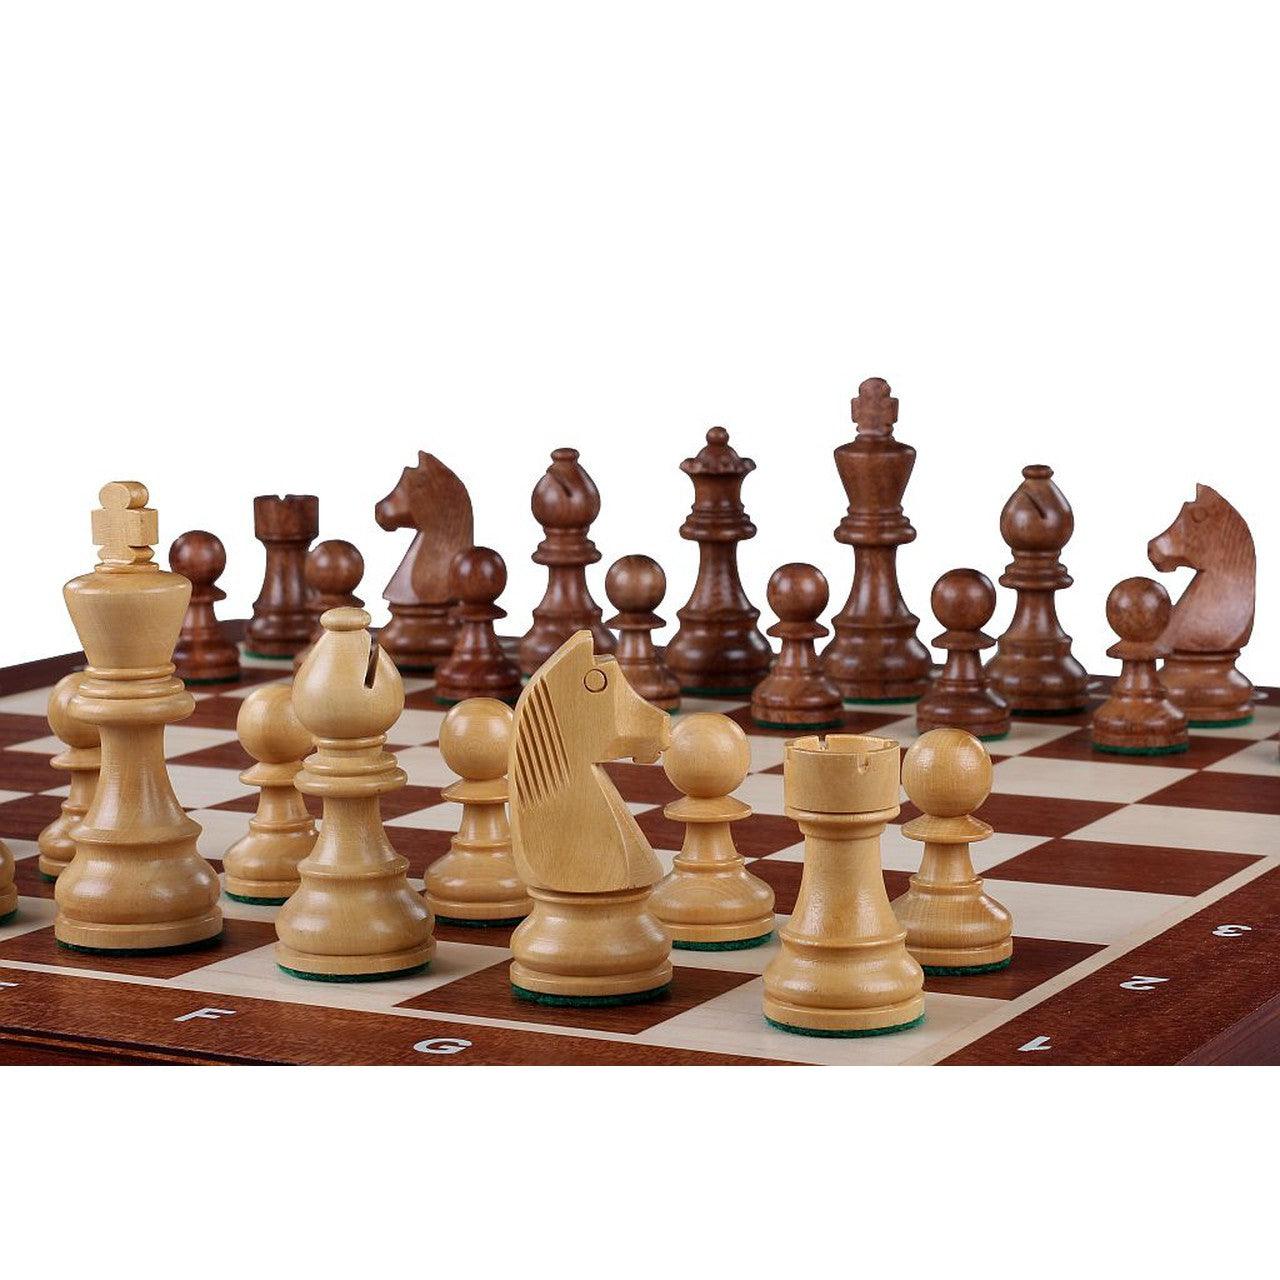 GERMAN STAUNTON Chess Set